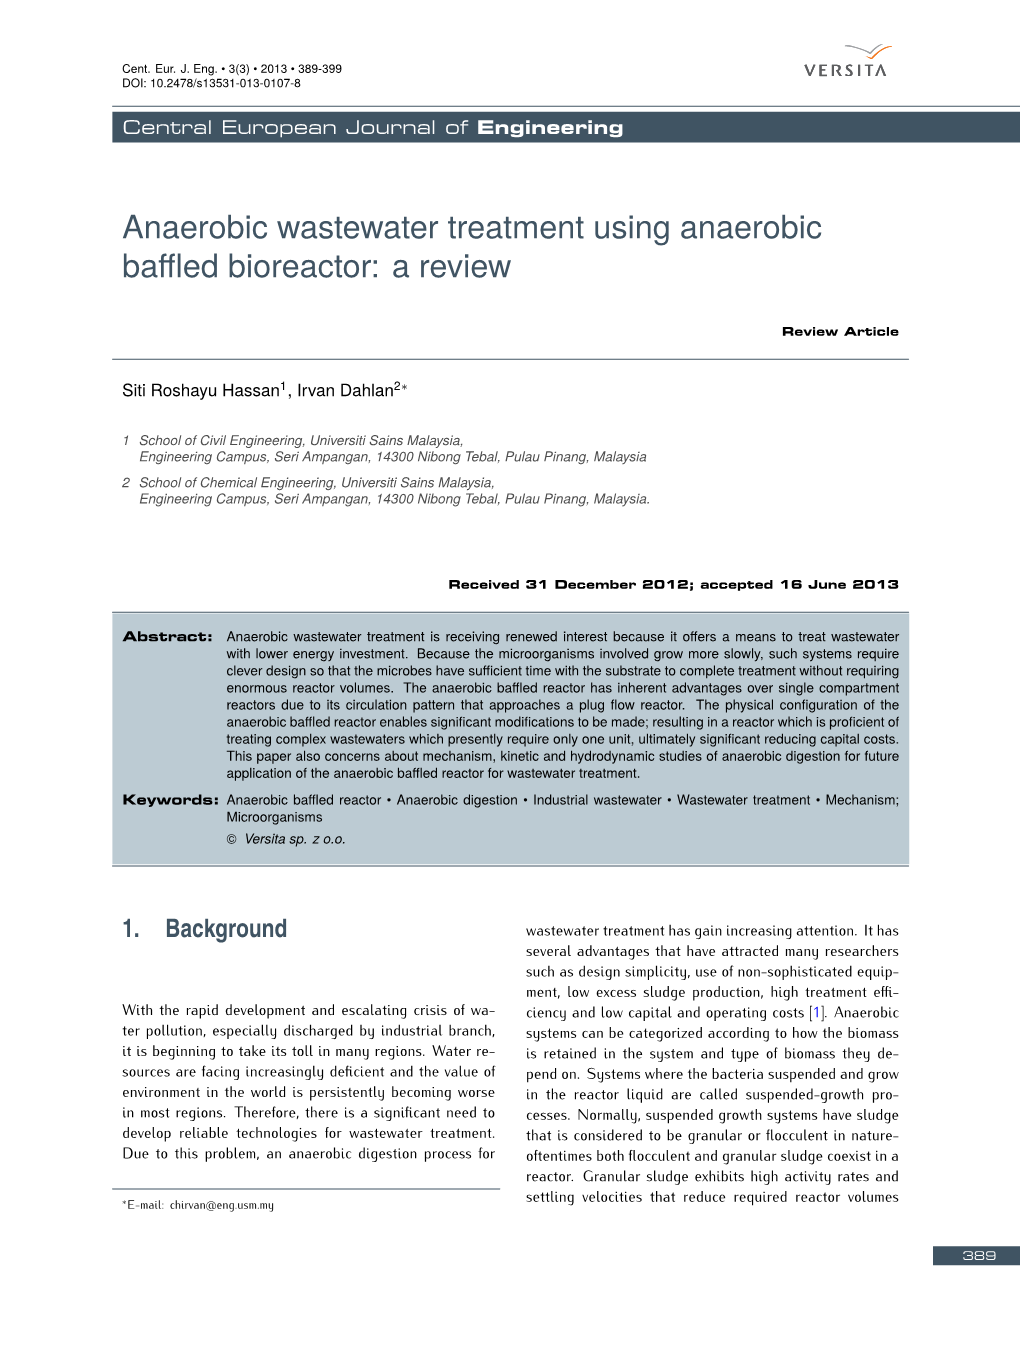 Anaerobic Wastewater Treatment Using Anaerobic Baffled Bioreactor